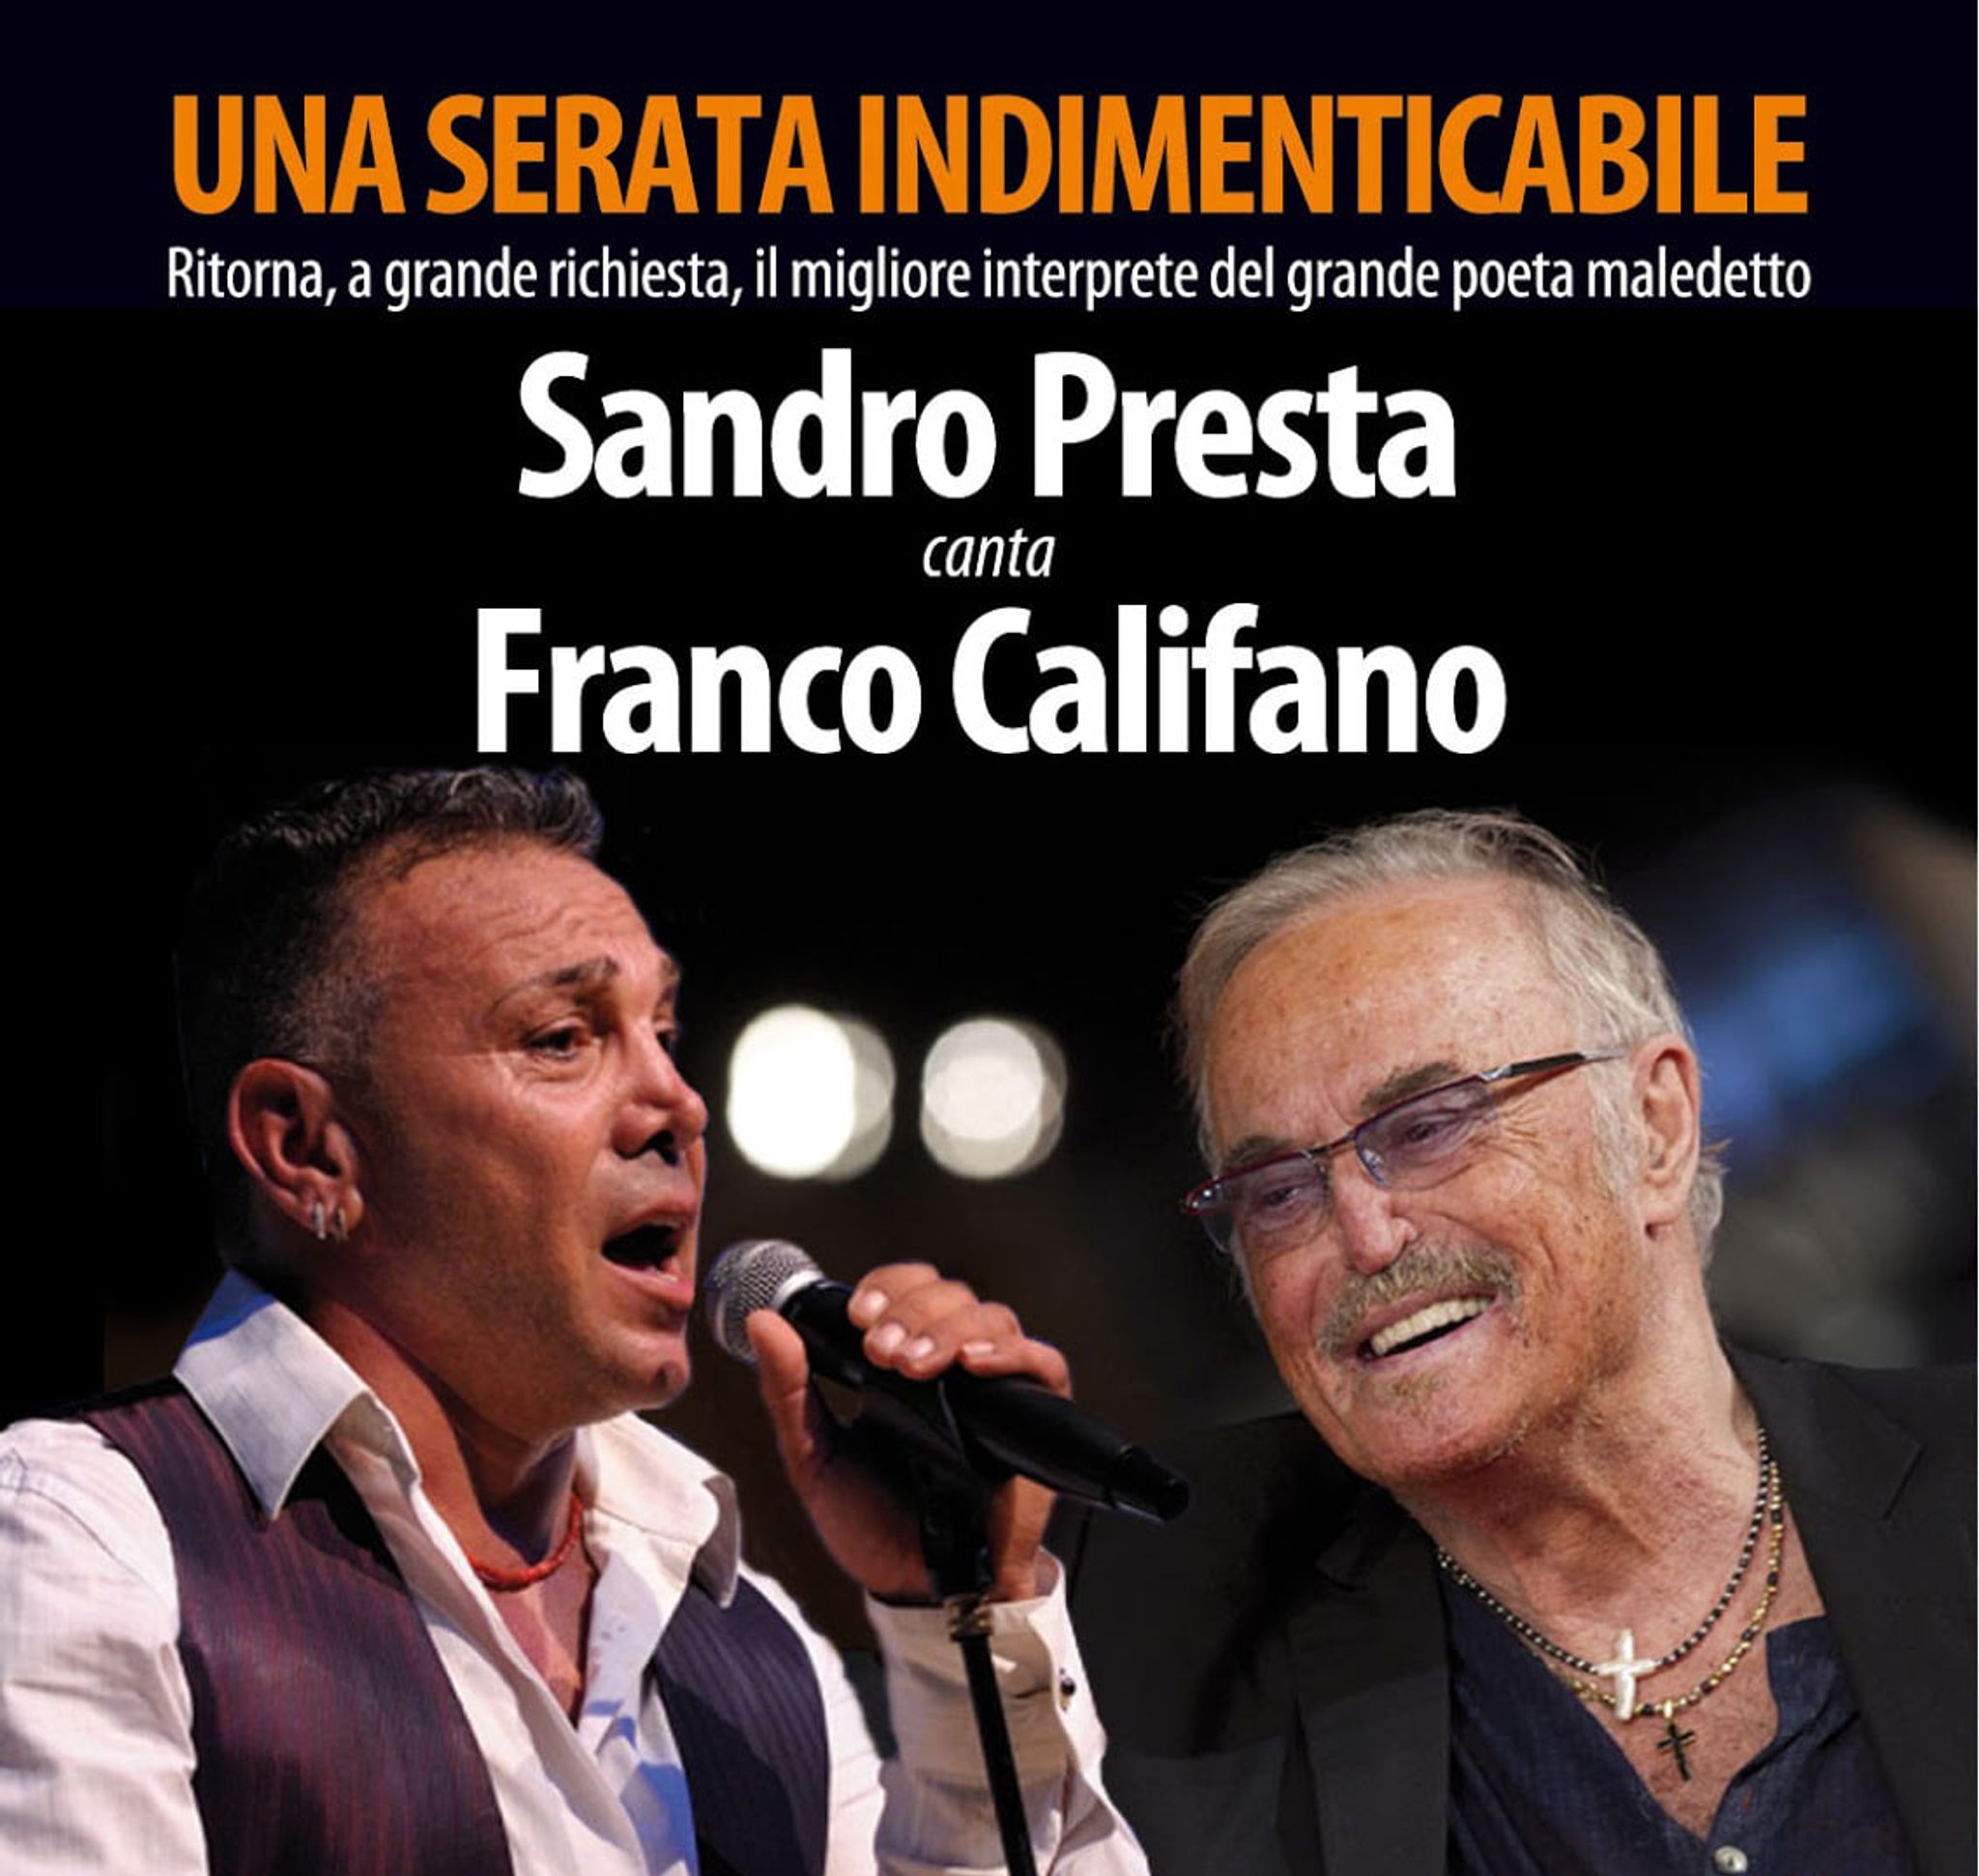 Evening tribute to Franco Califano with Sandro Presta